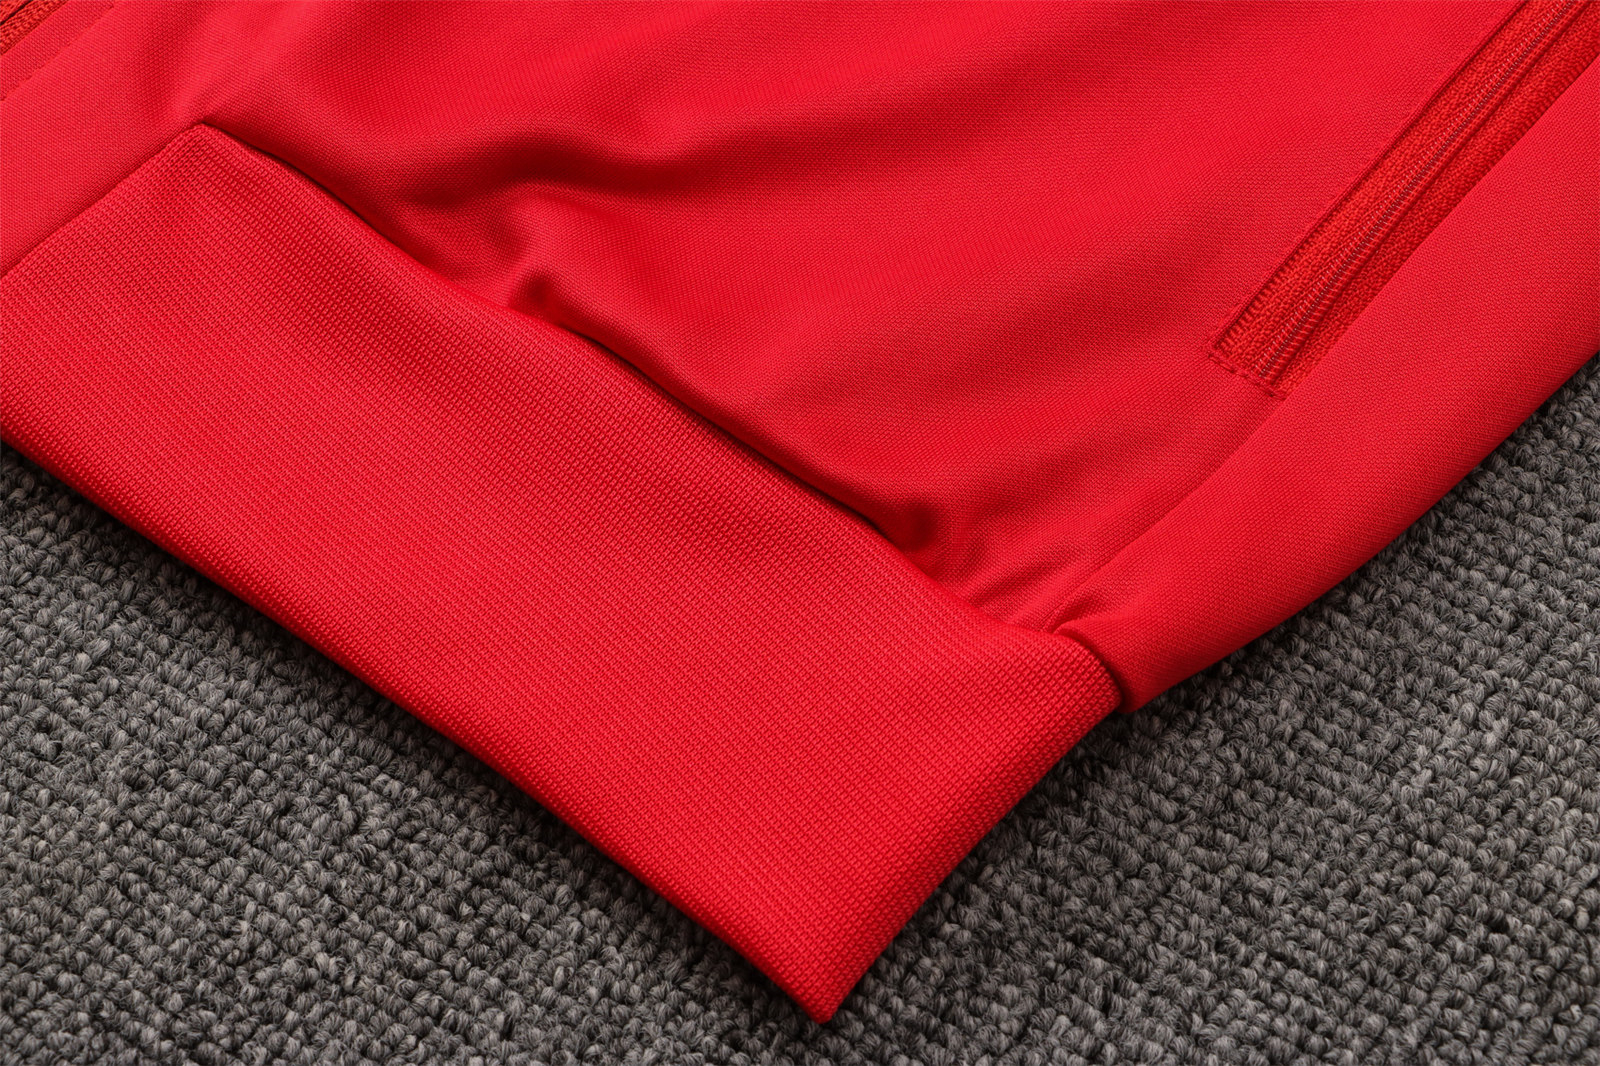 Benfica Soccer Training Suit Jacket + Pants Red Men's 2021/22